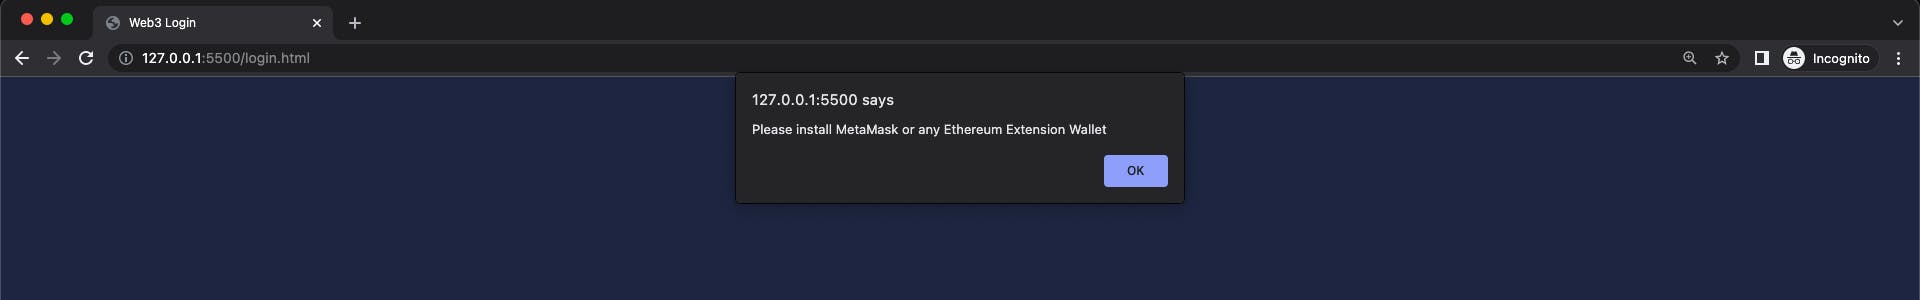 Screenshot prompting the user to install Ethereum wallet - Metamask